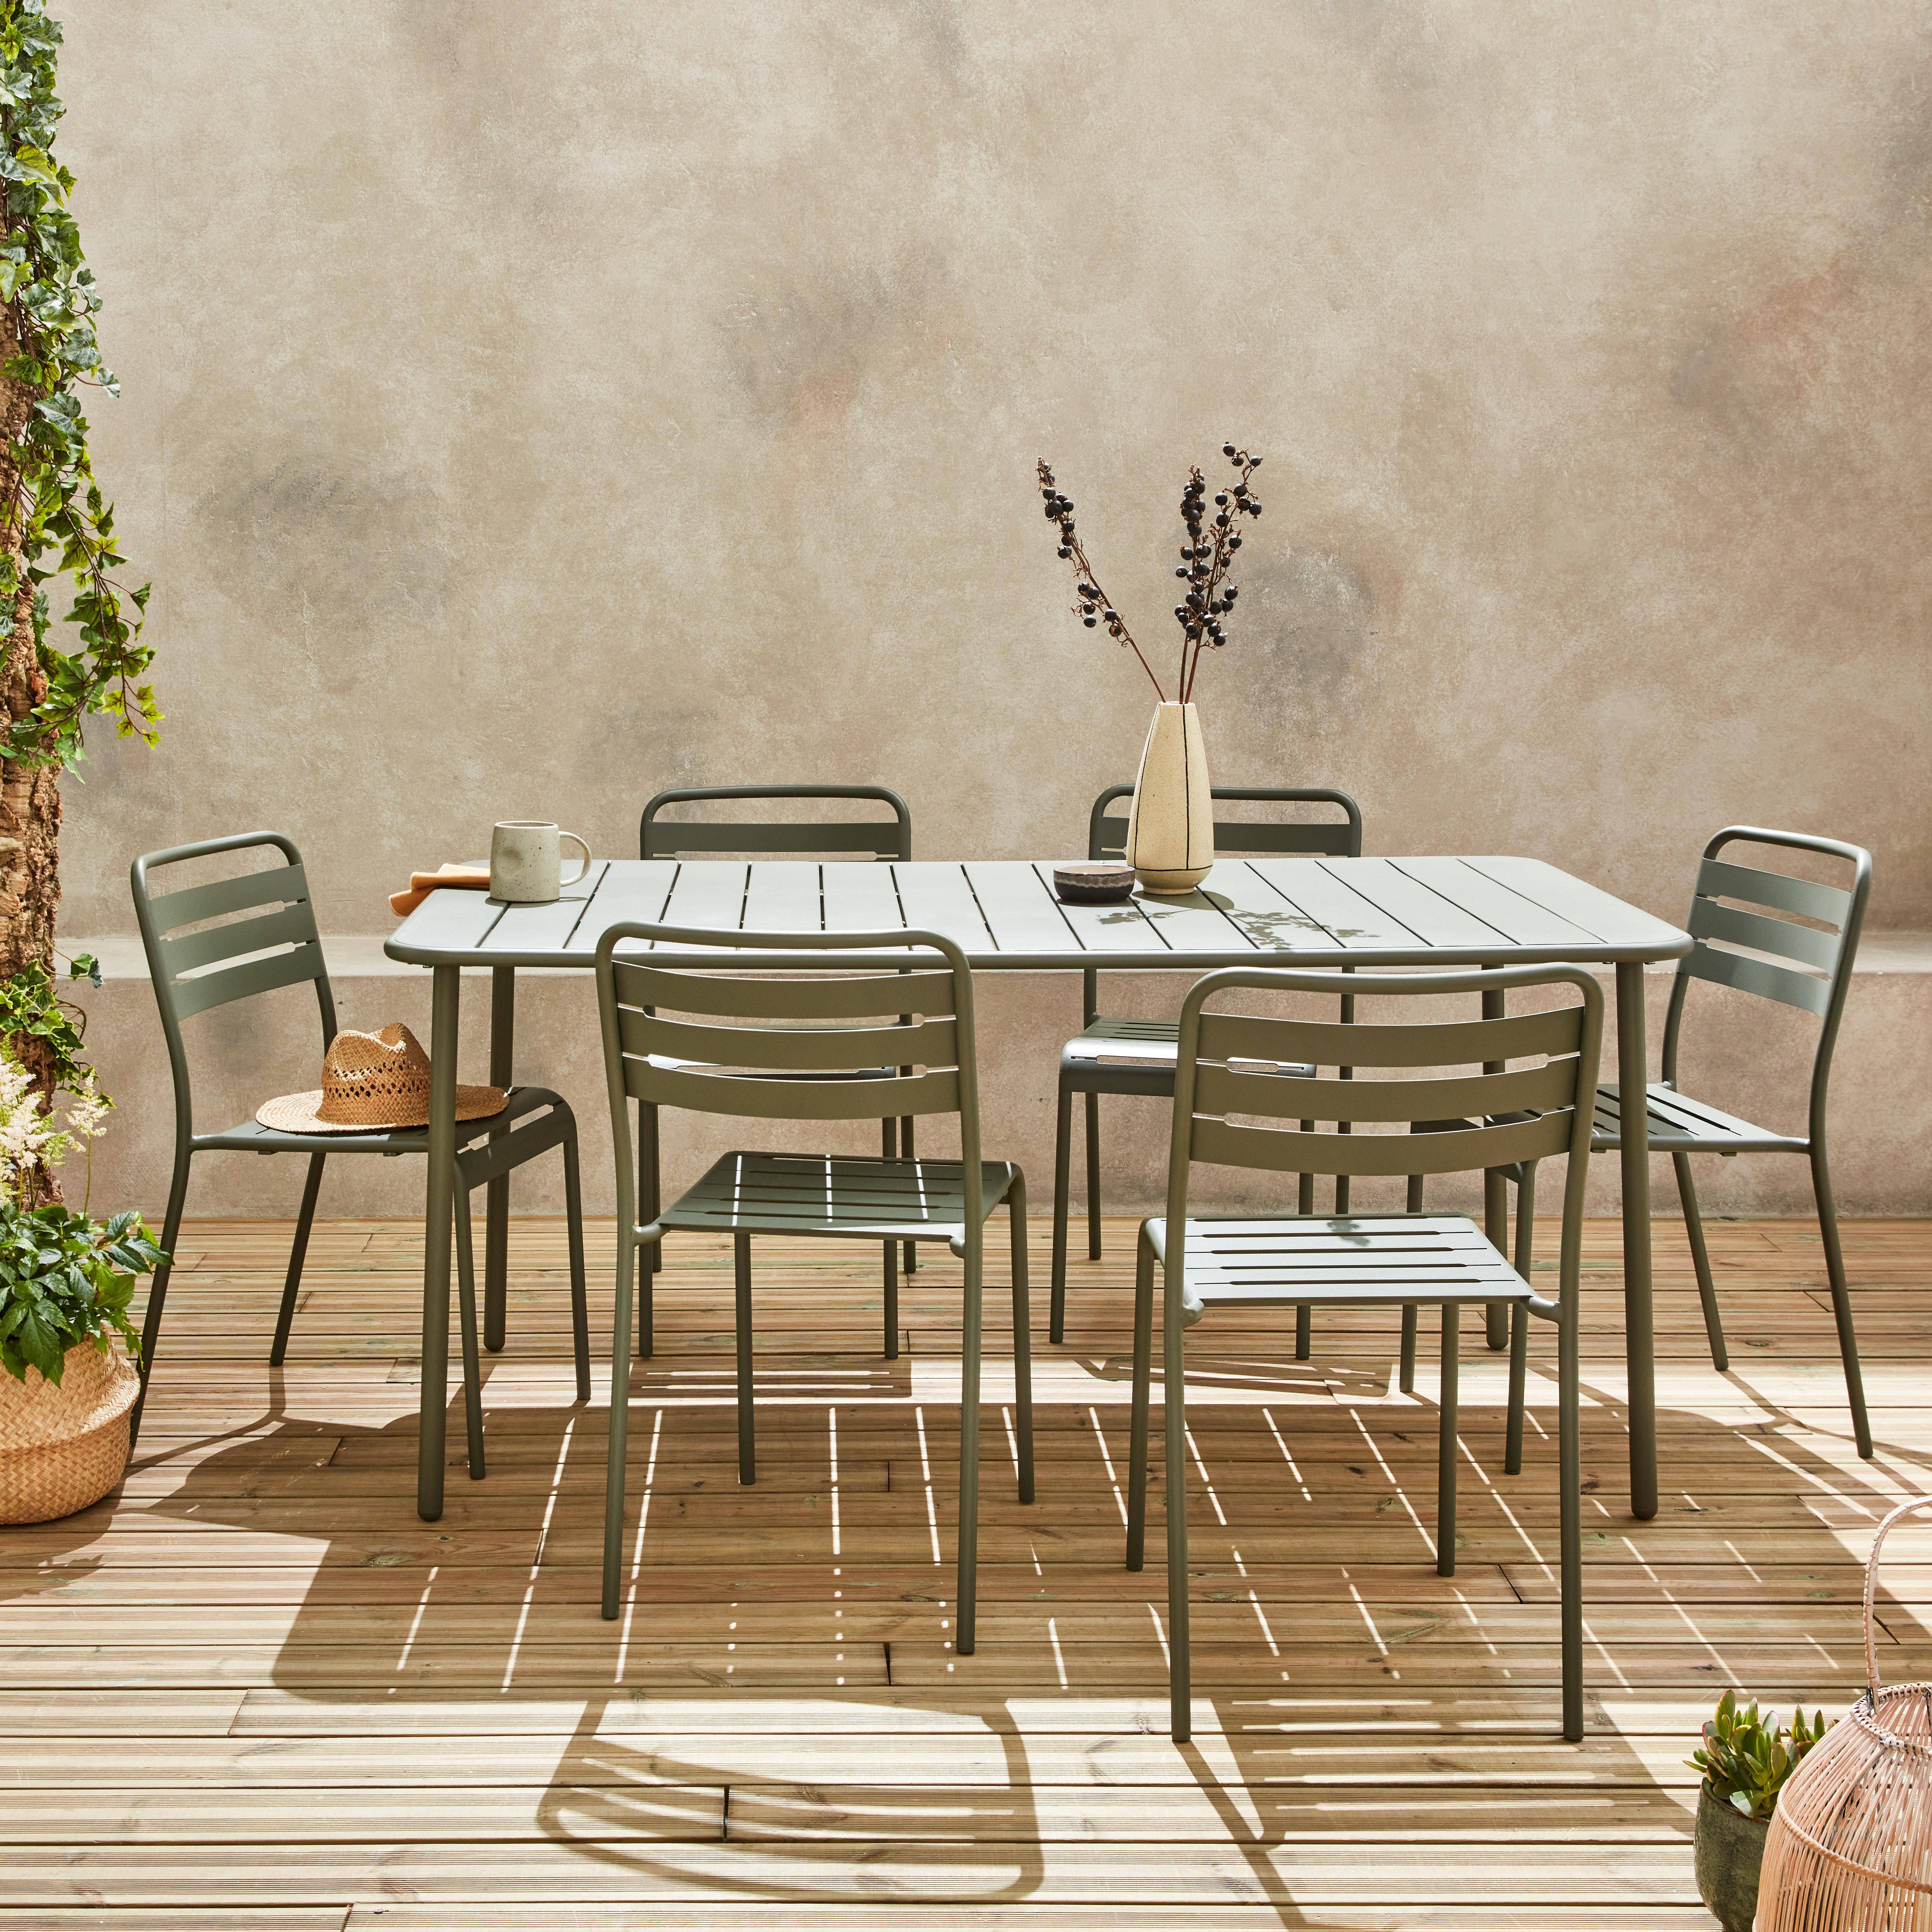 6-8 seater rectangular steel garden table set with chairs, 160cm, khaki green Photo2